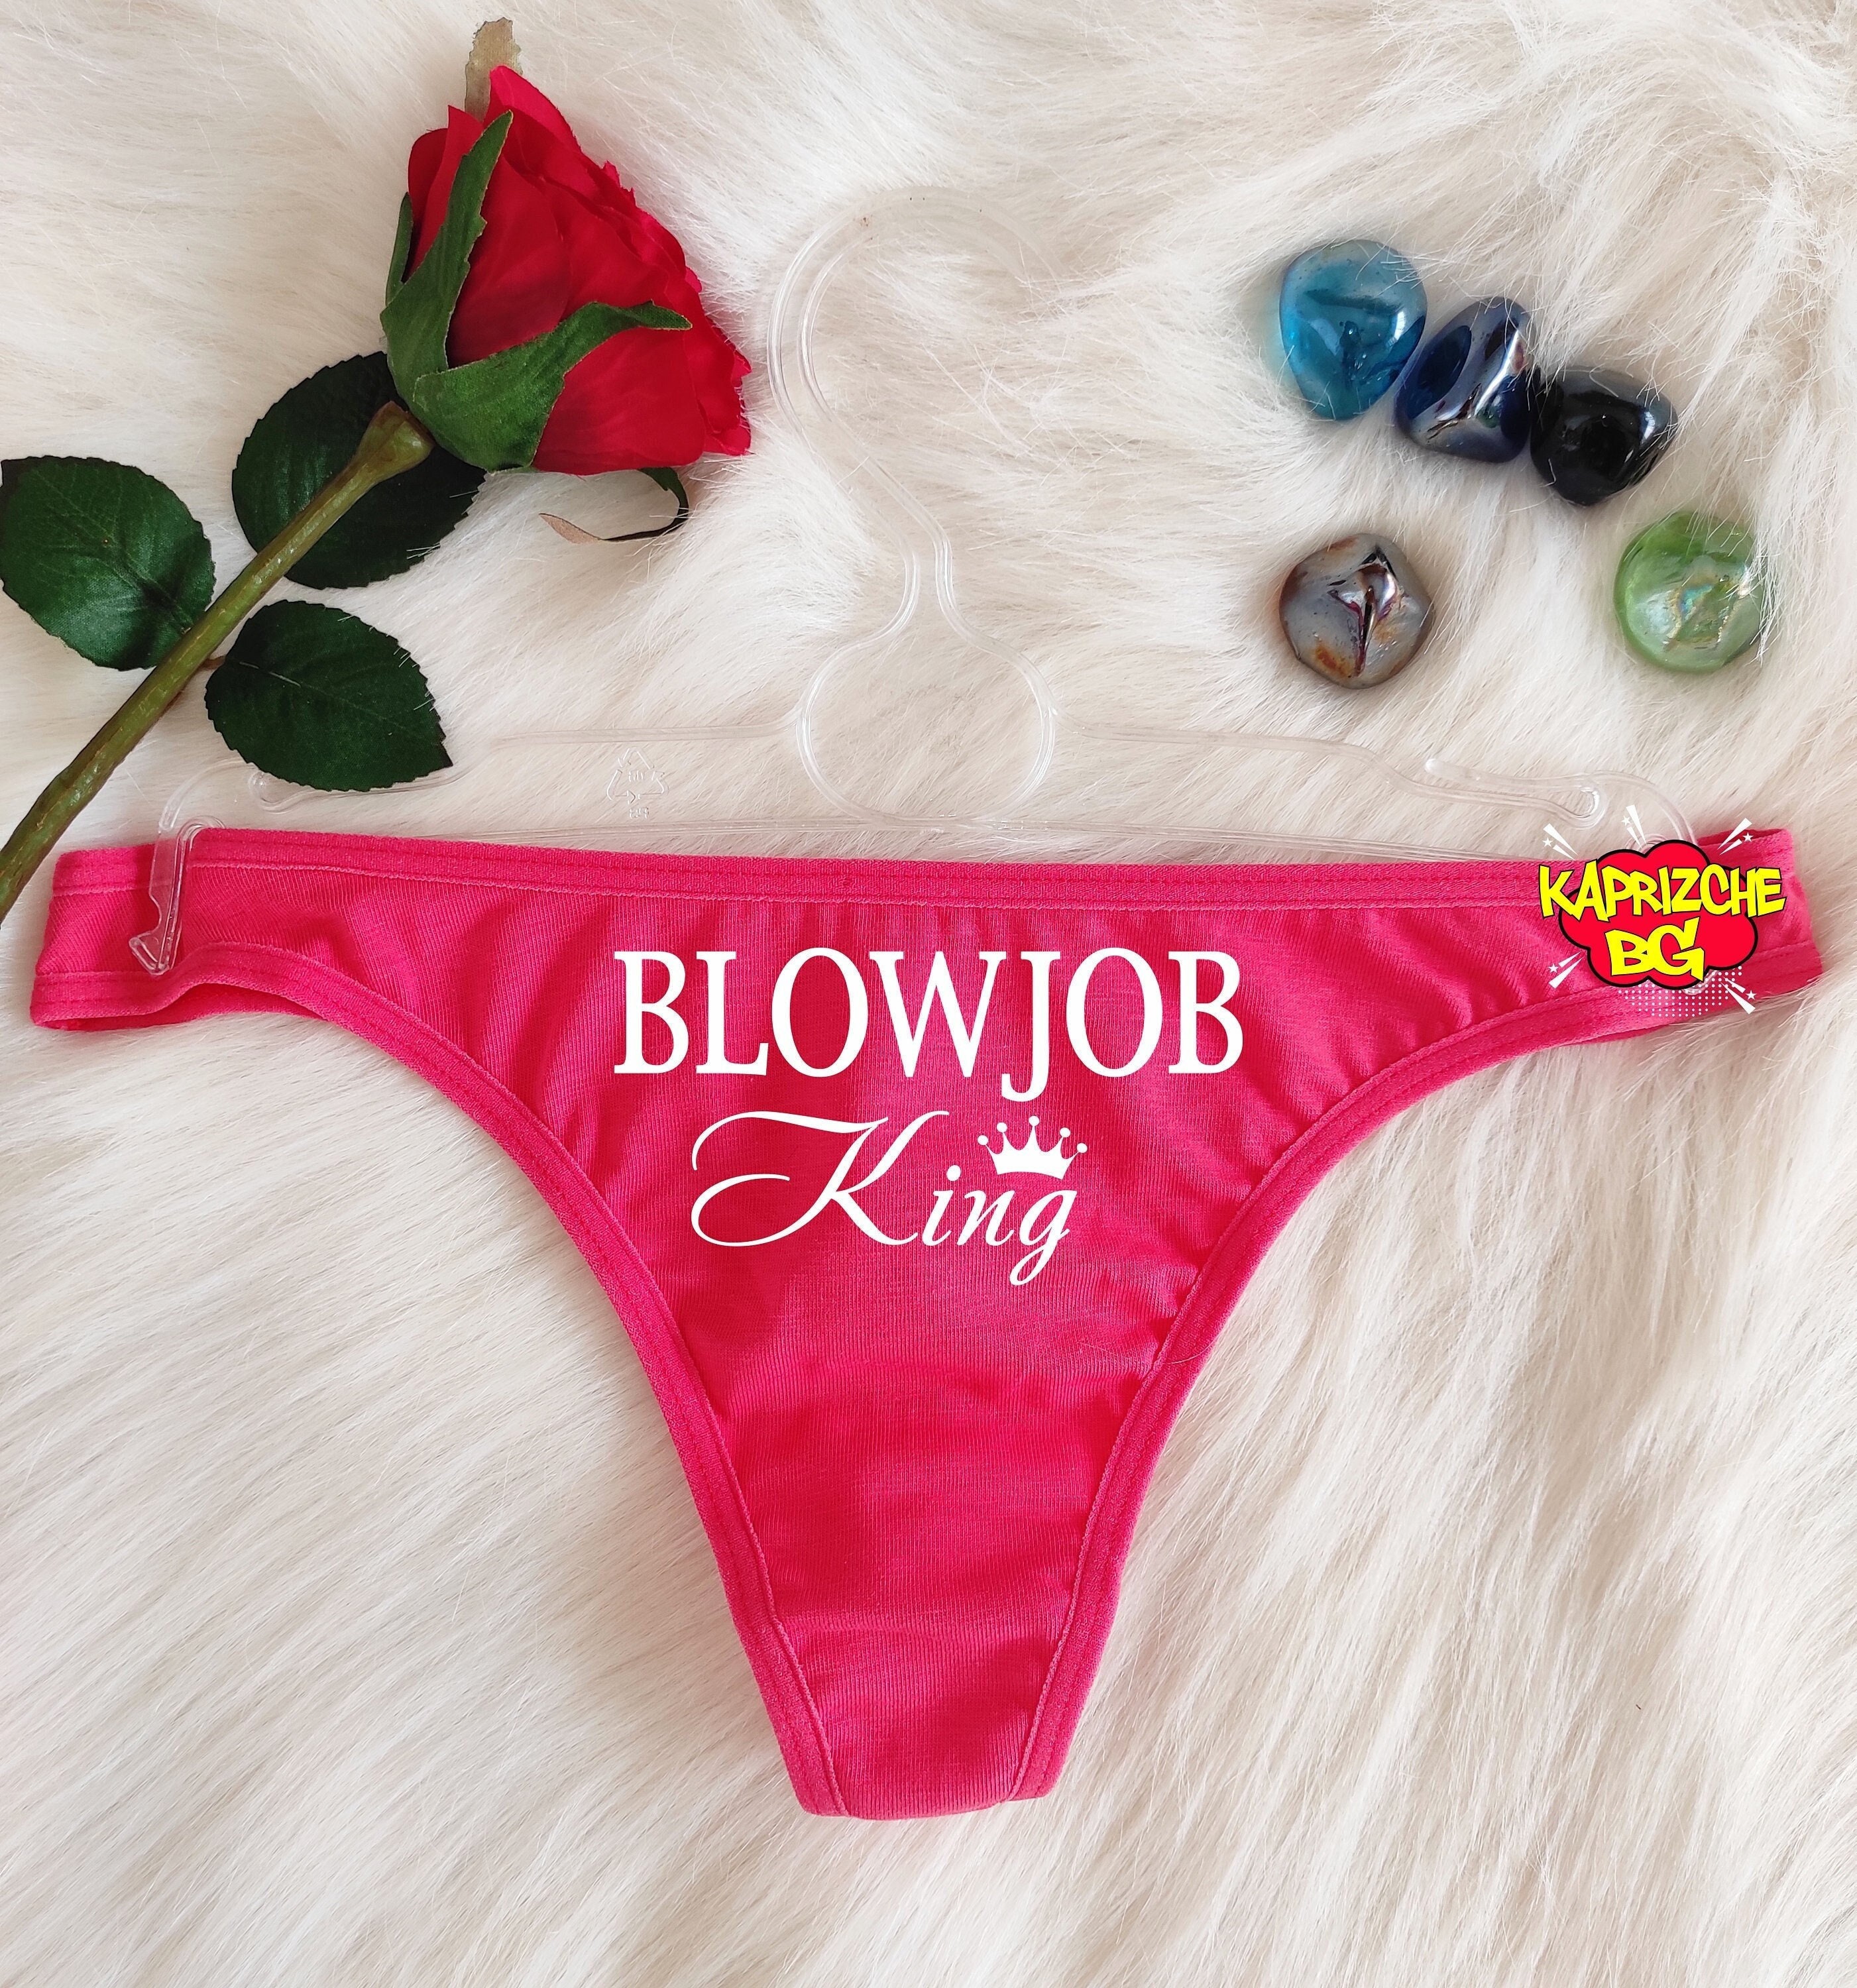 Blowjob Kinglingerie for Sissies Cuckold Lingerie Sexy